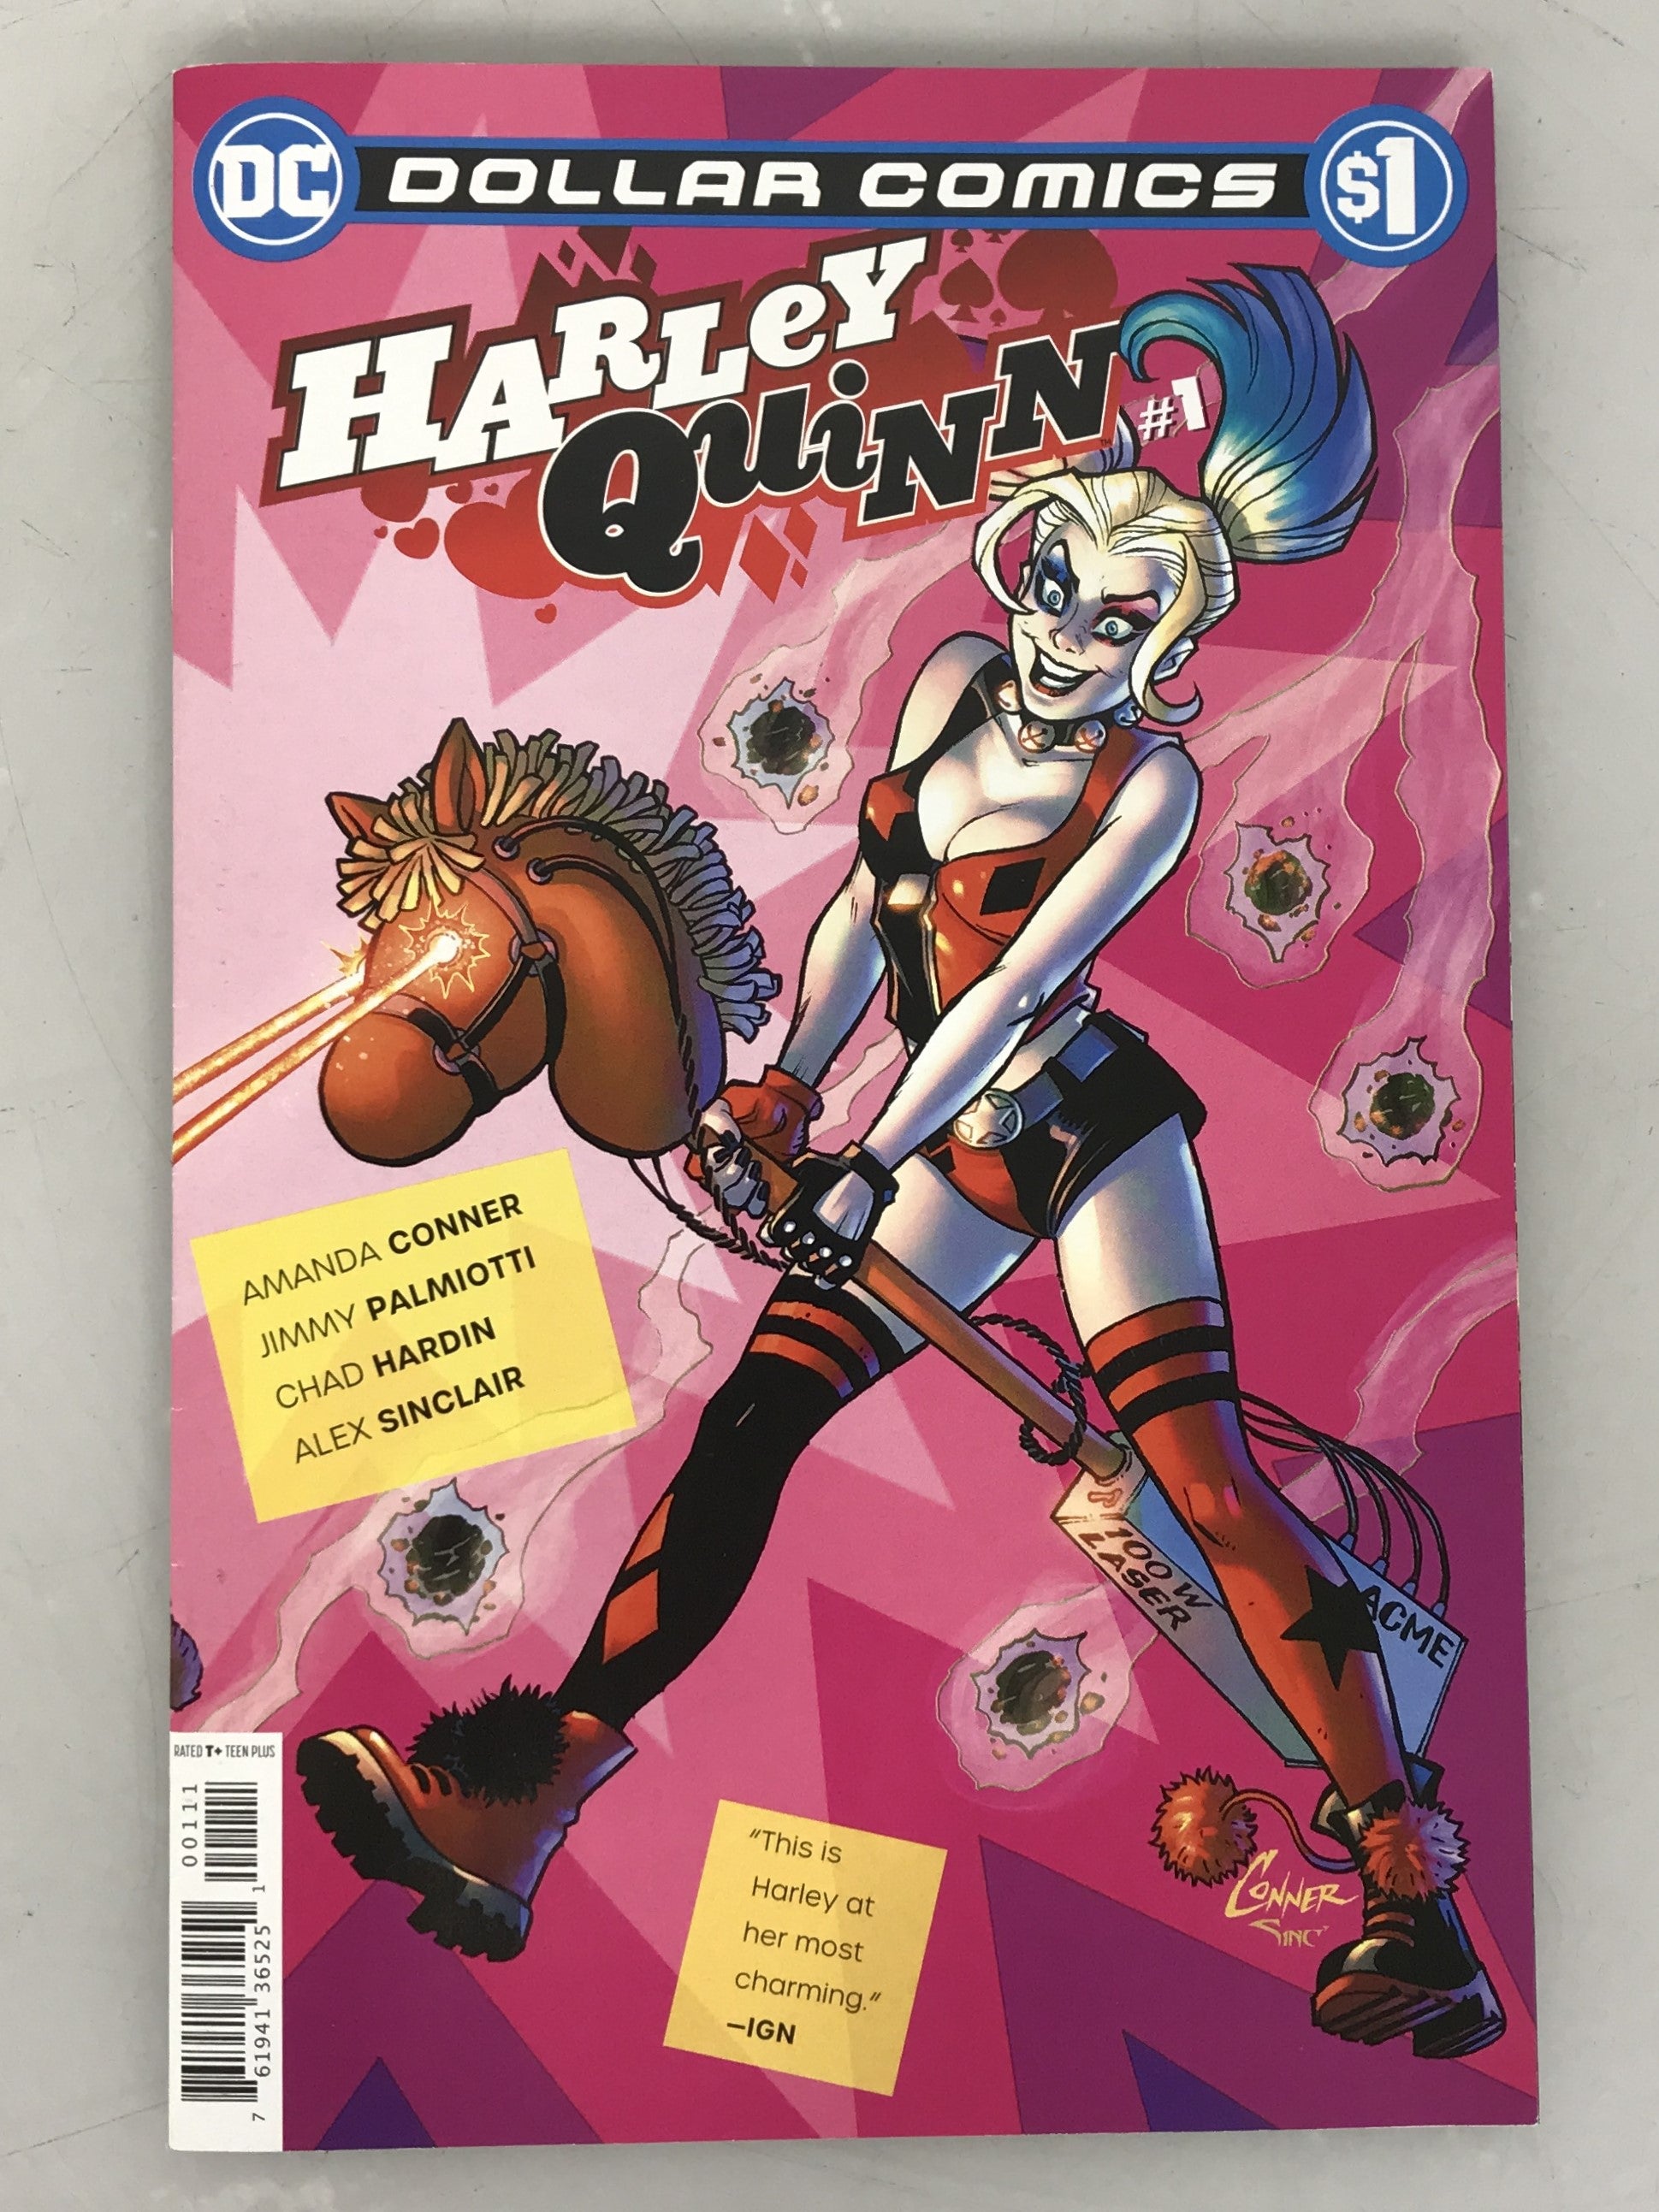 Dollar Comics: Harley Quinn 1 2013